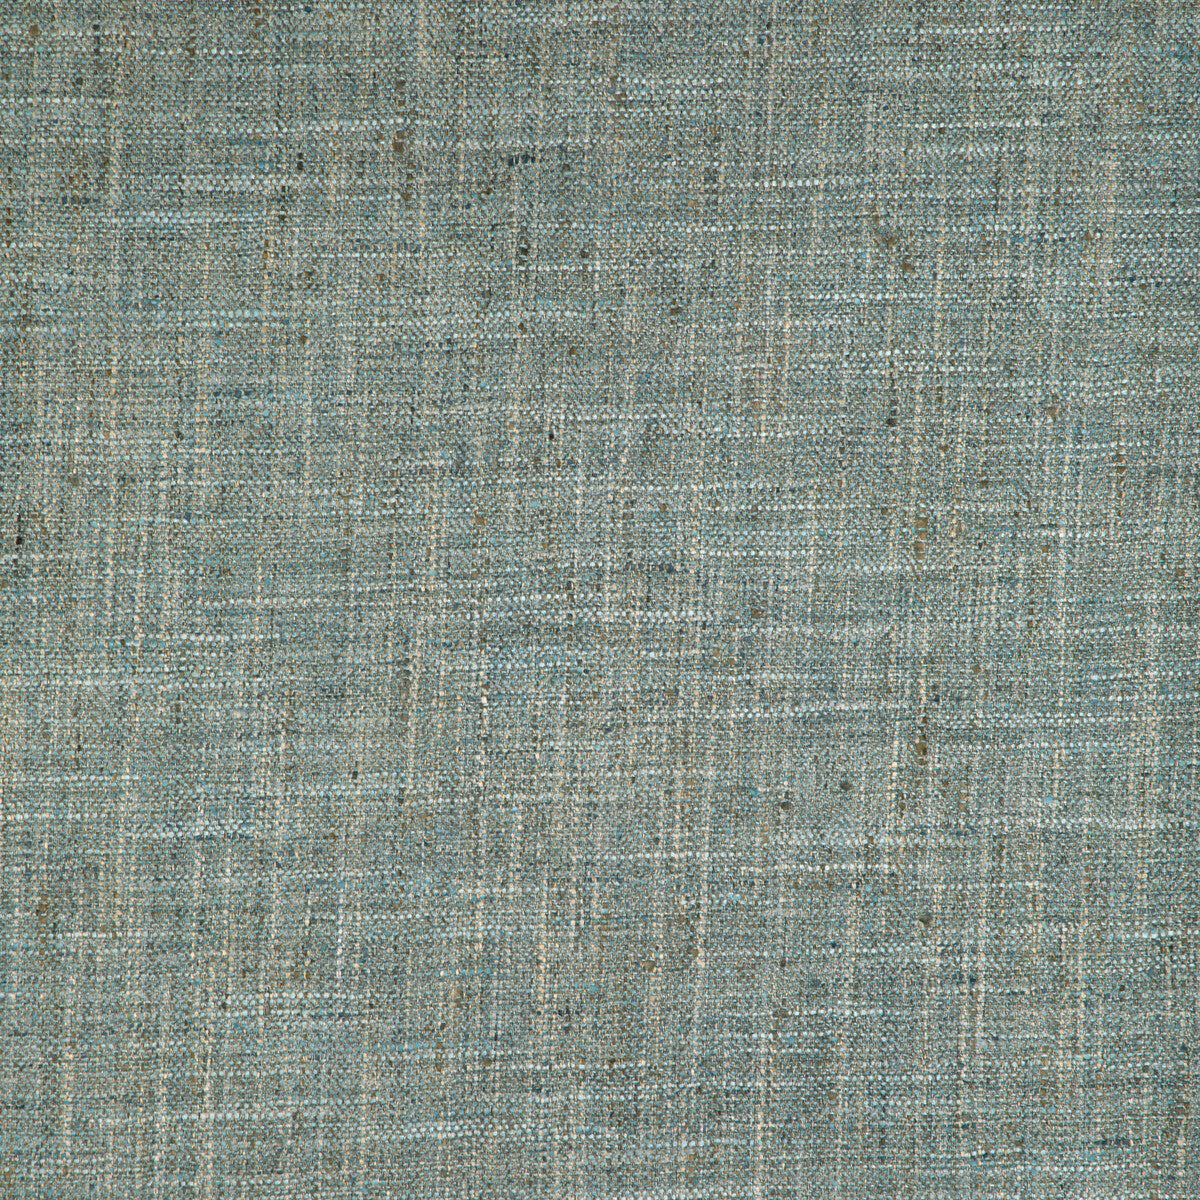 Kravet Smart fabric in 34088-13 color - pattern 34088.13.0 - by Kravet Smart